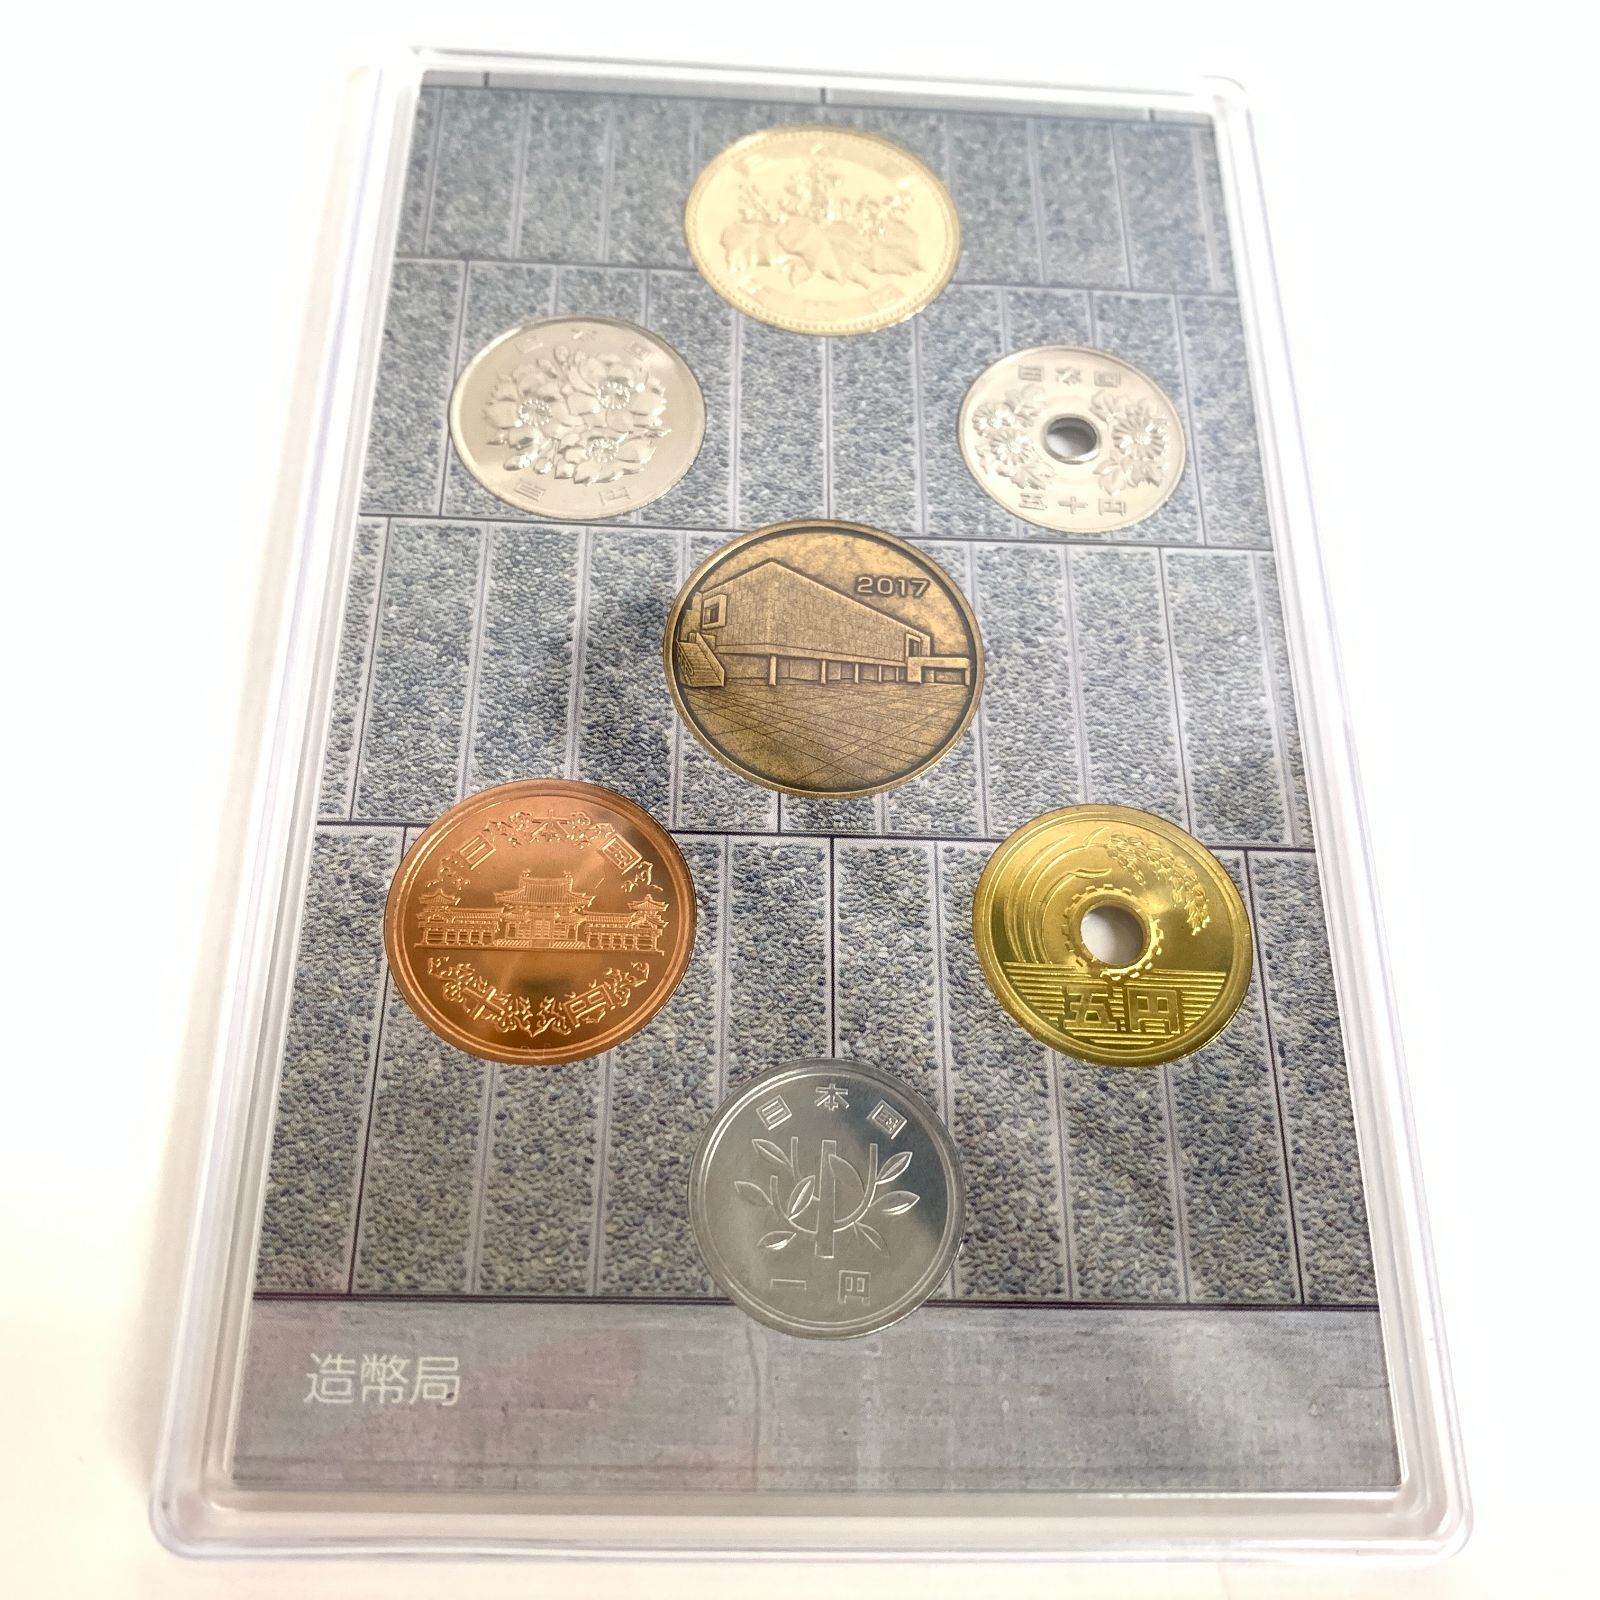 世界遺産 貨幣セット - 旧貨幣/金貨/銀貨/記念硬貨